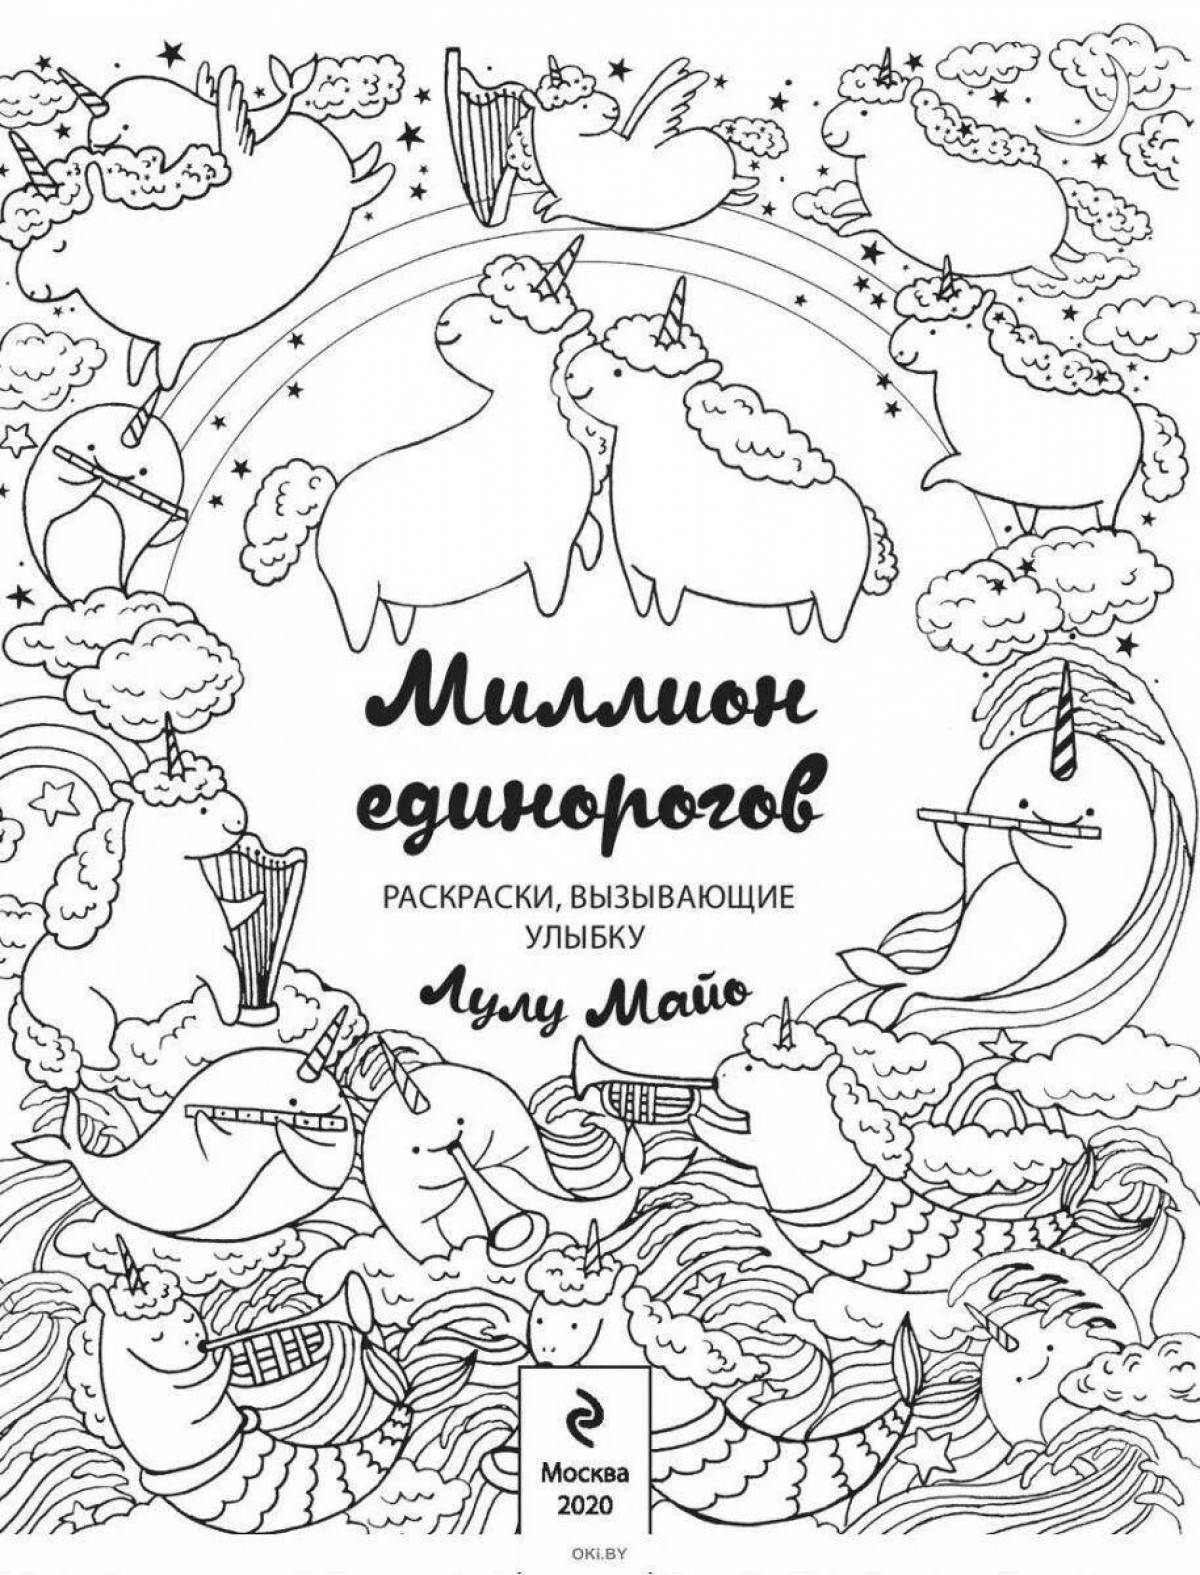 Amazing coloring book million mermaids lulu mayo